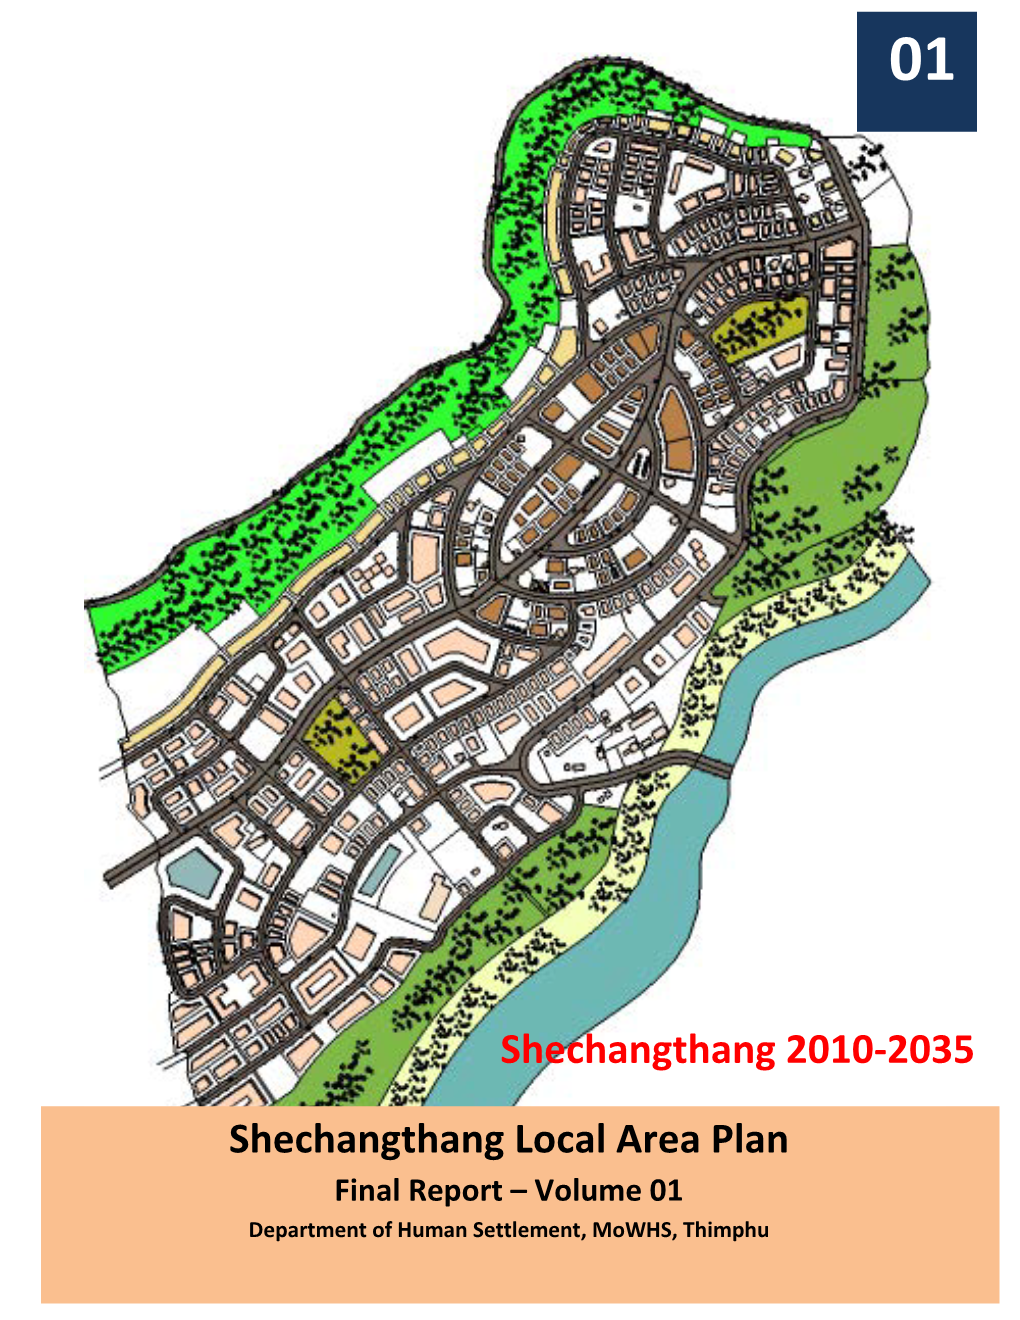 Shechangthang (Ranibagan) Local Area Plan Volume 01